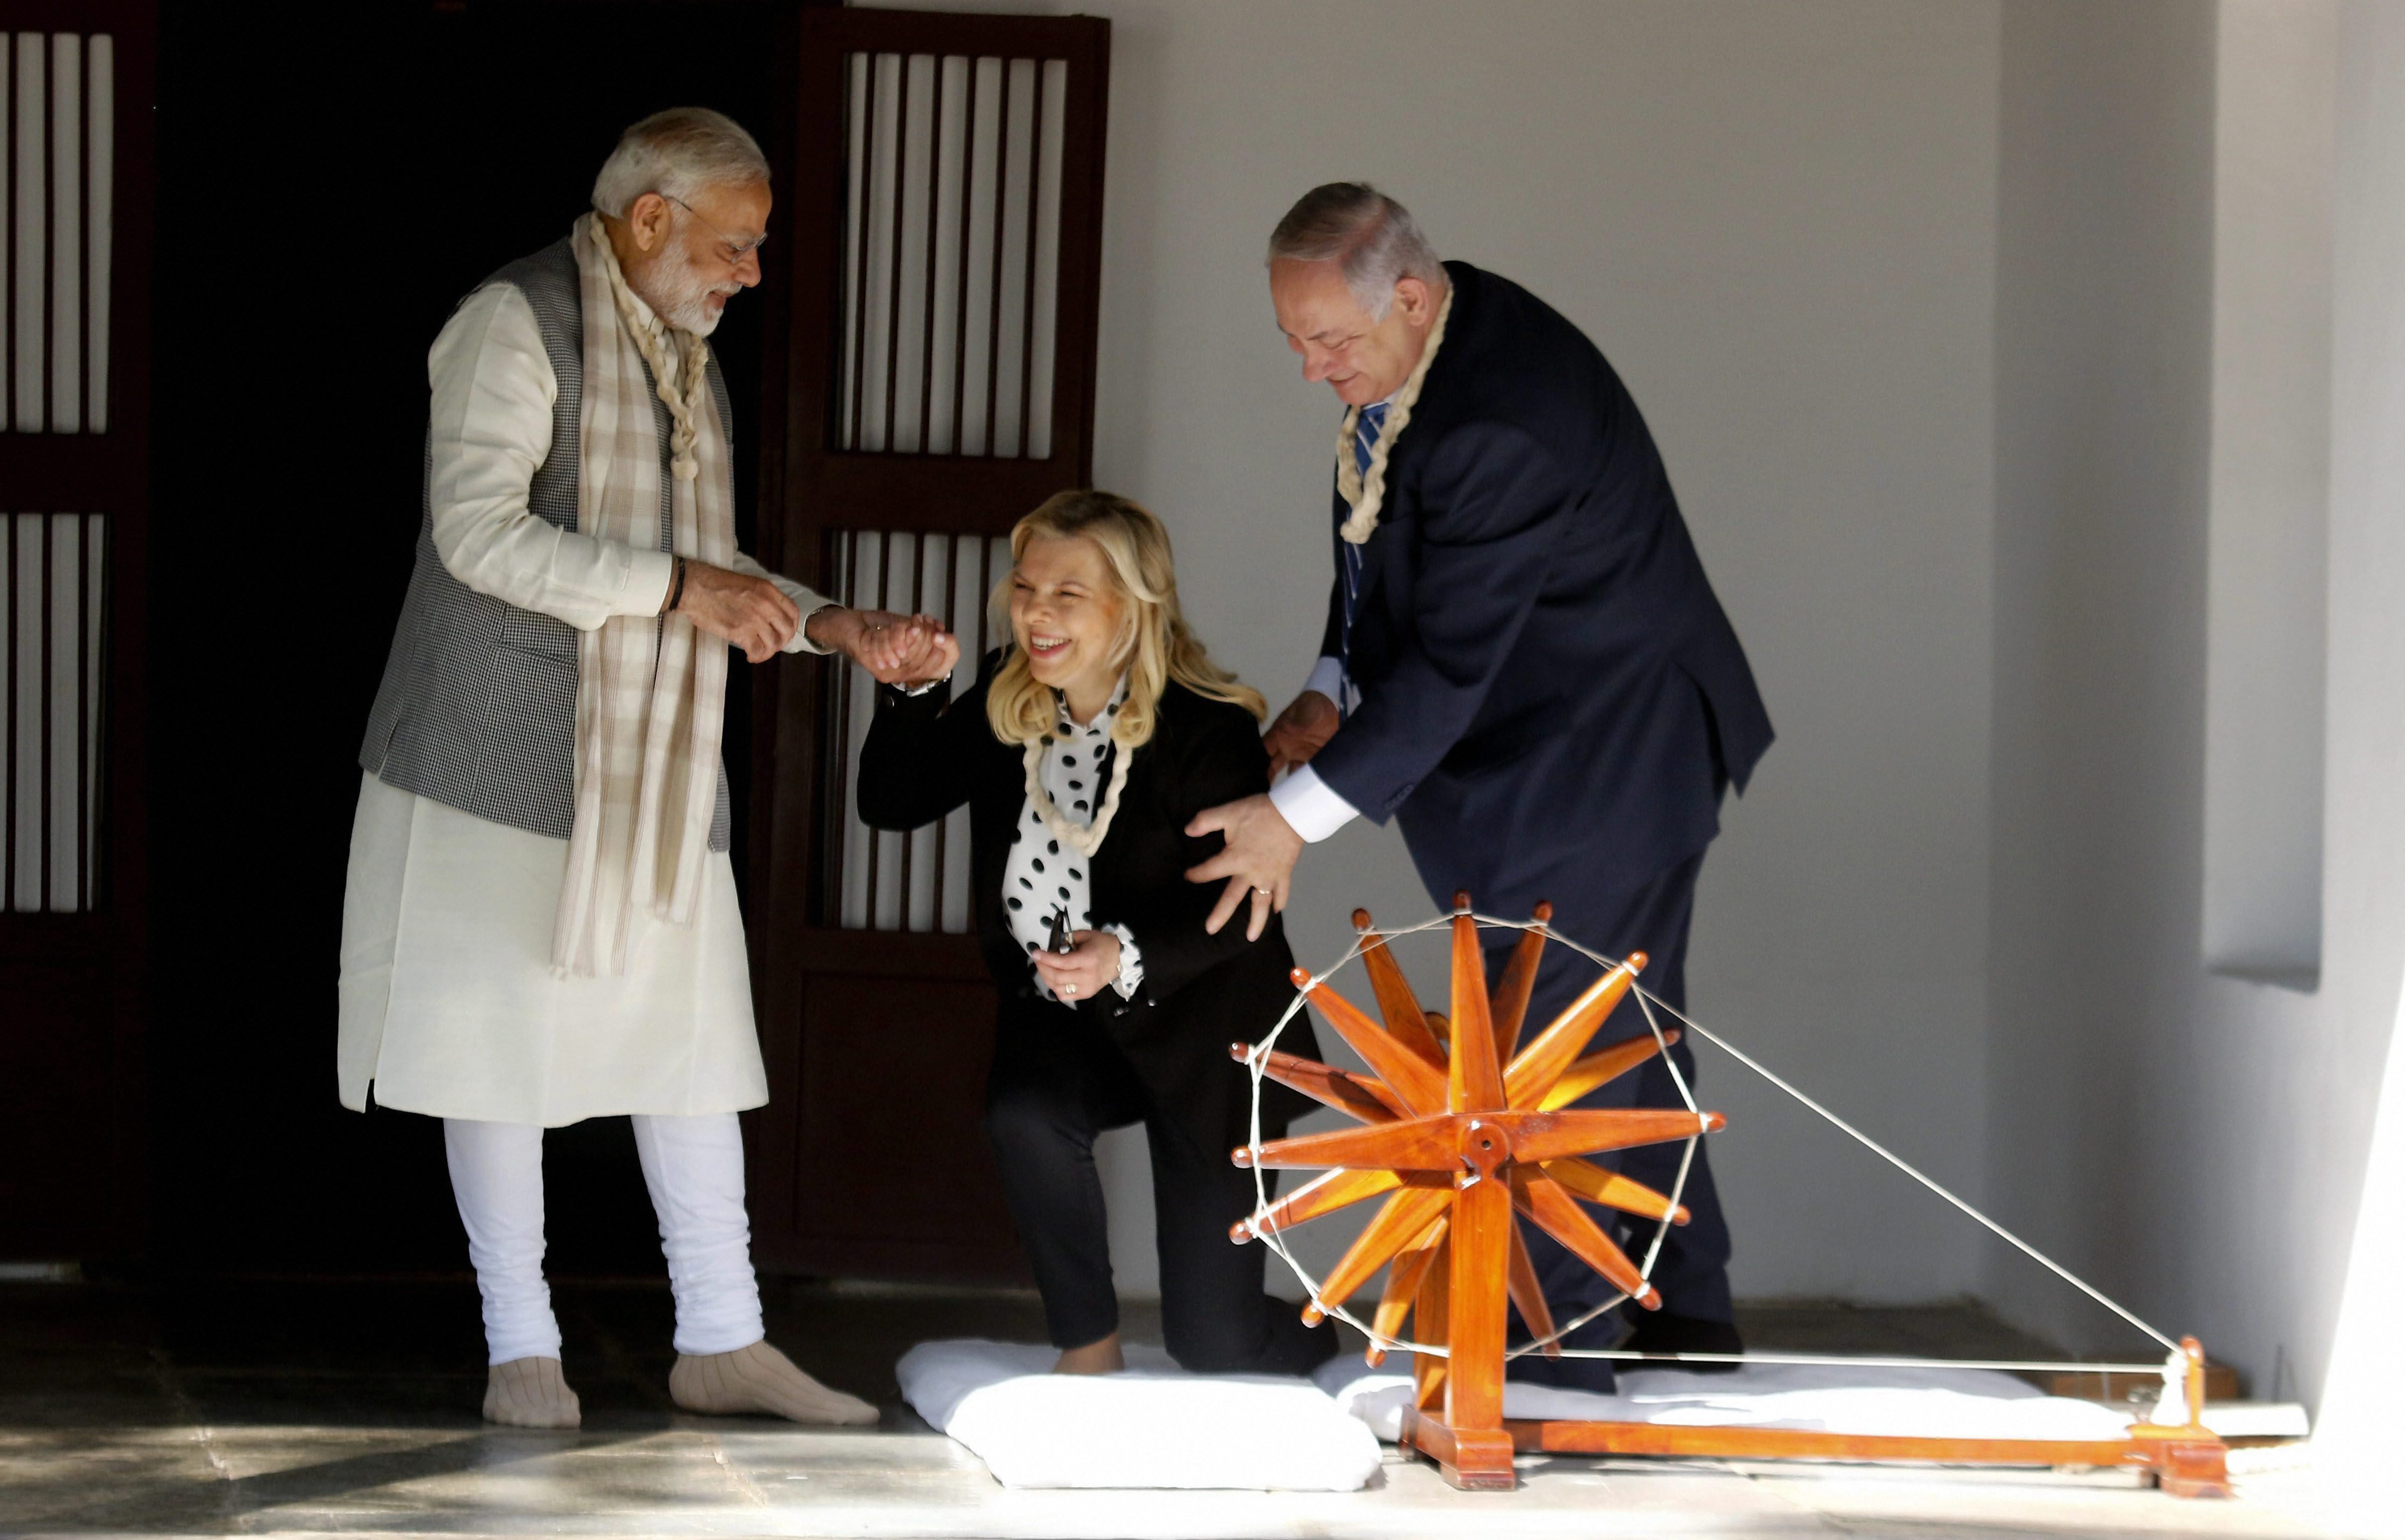 Prime Minister Narendra Modi and Israeli Prime Minister Benjamin Netanyahu assist Sara Netanyahu after she tried a traditional 'charkha' or spinning wheel during their visit to Sabarmati Ashram in Ahmedabad - PTI